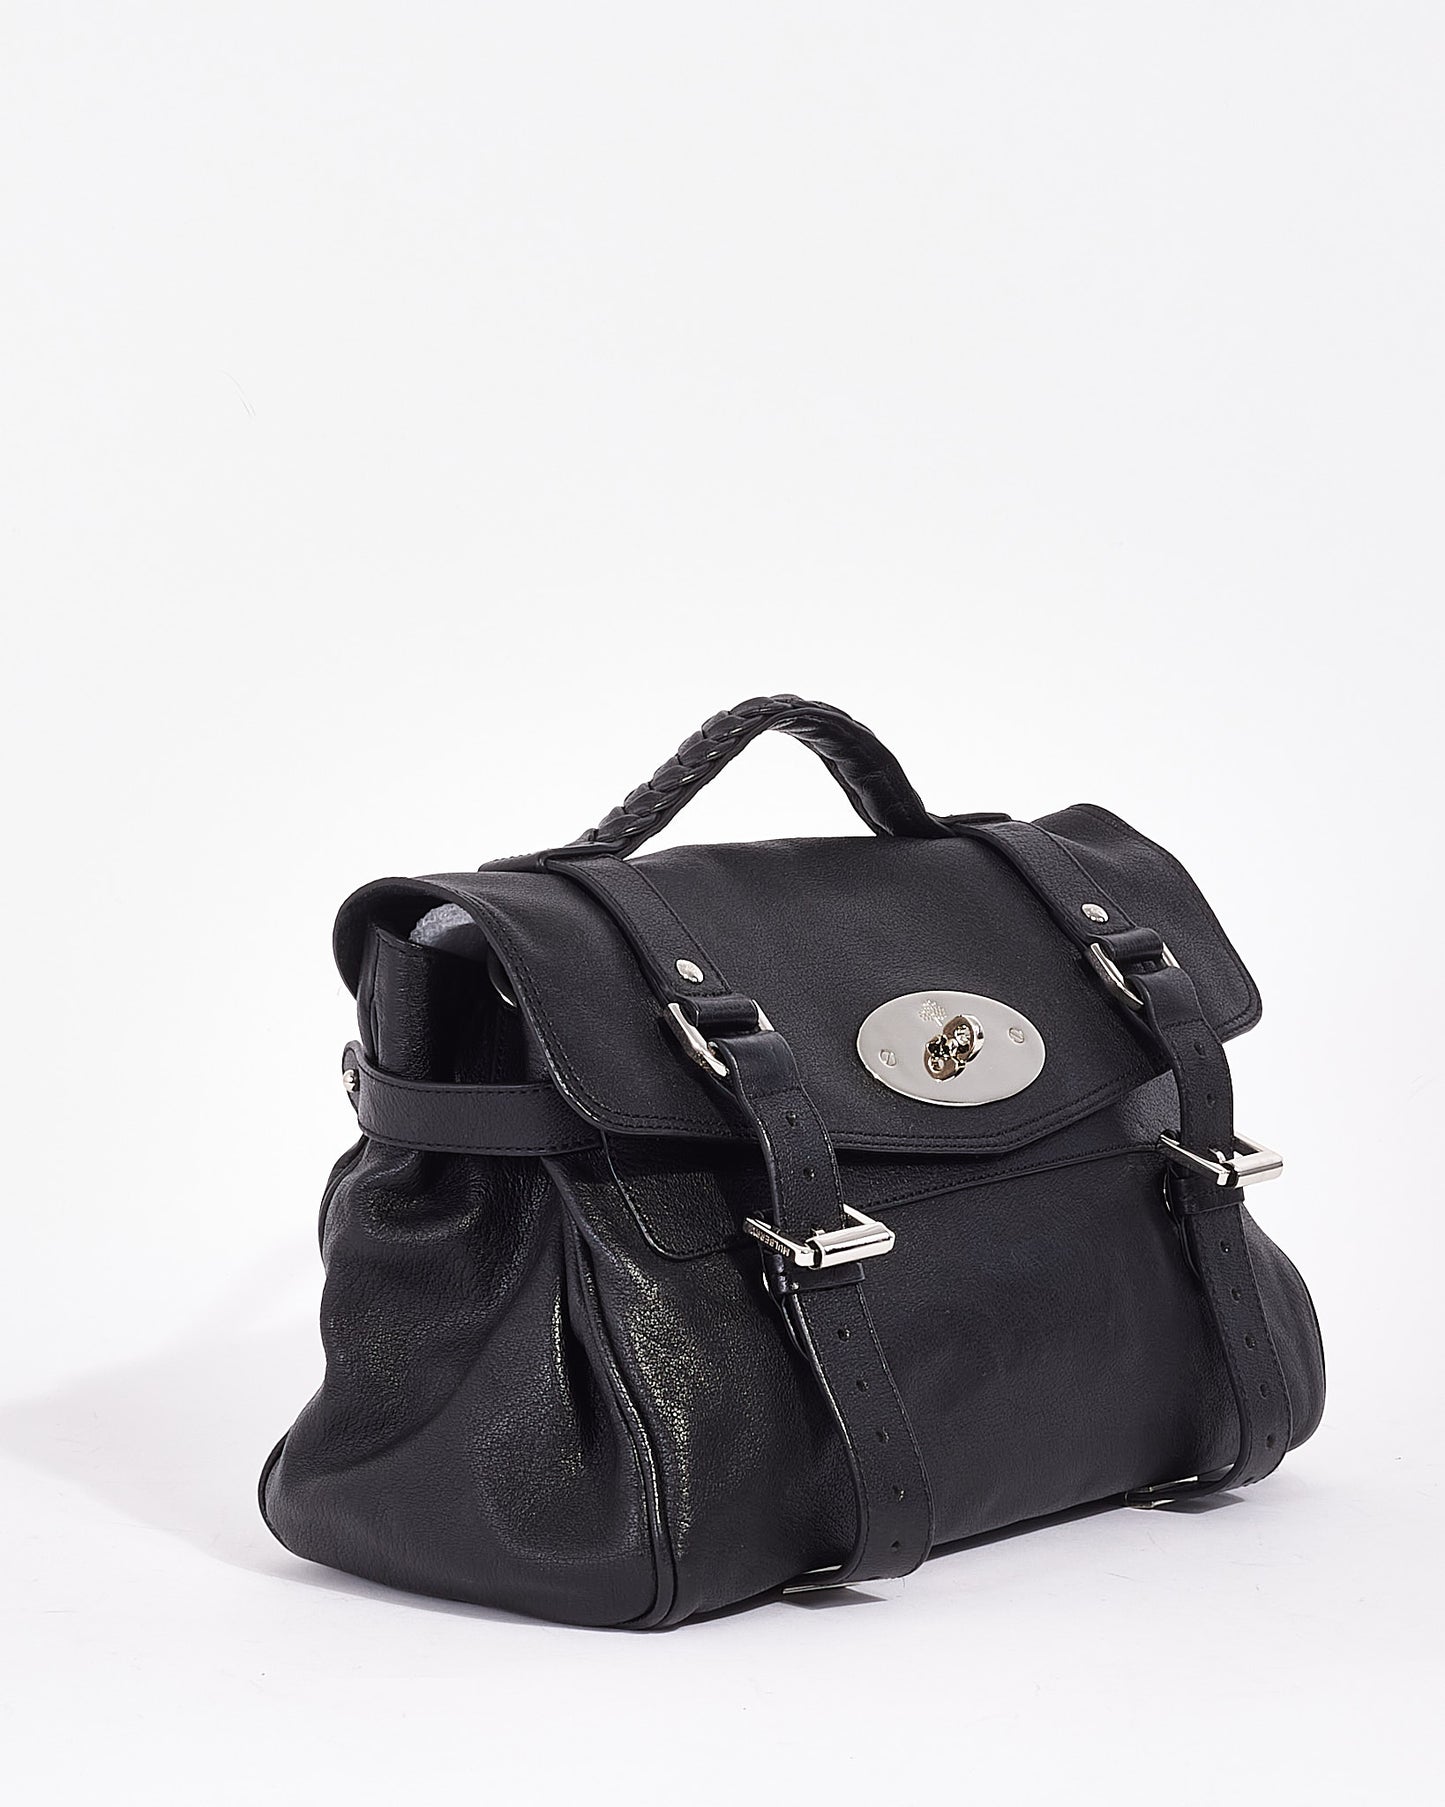 Mulberry Black Leather Alexa Satchel Bag